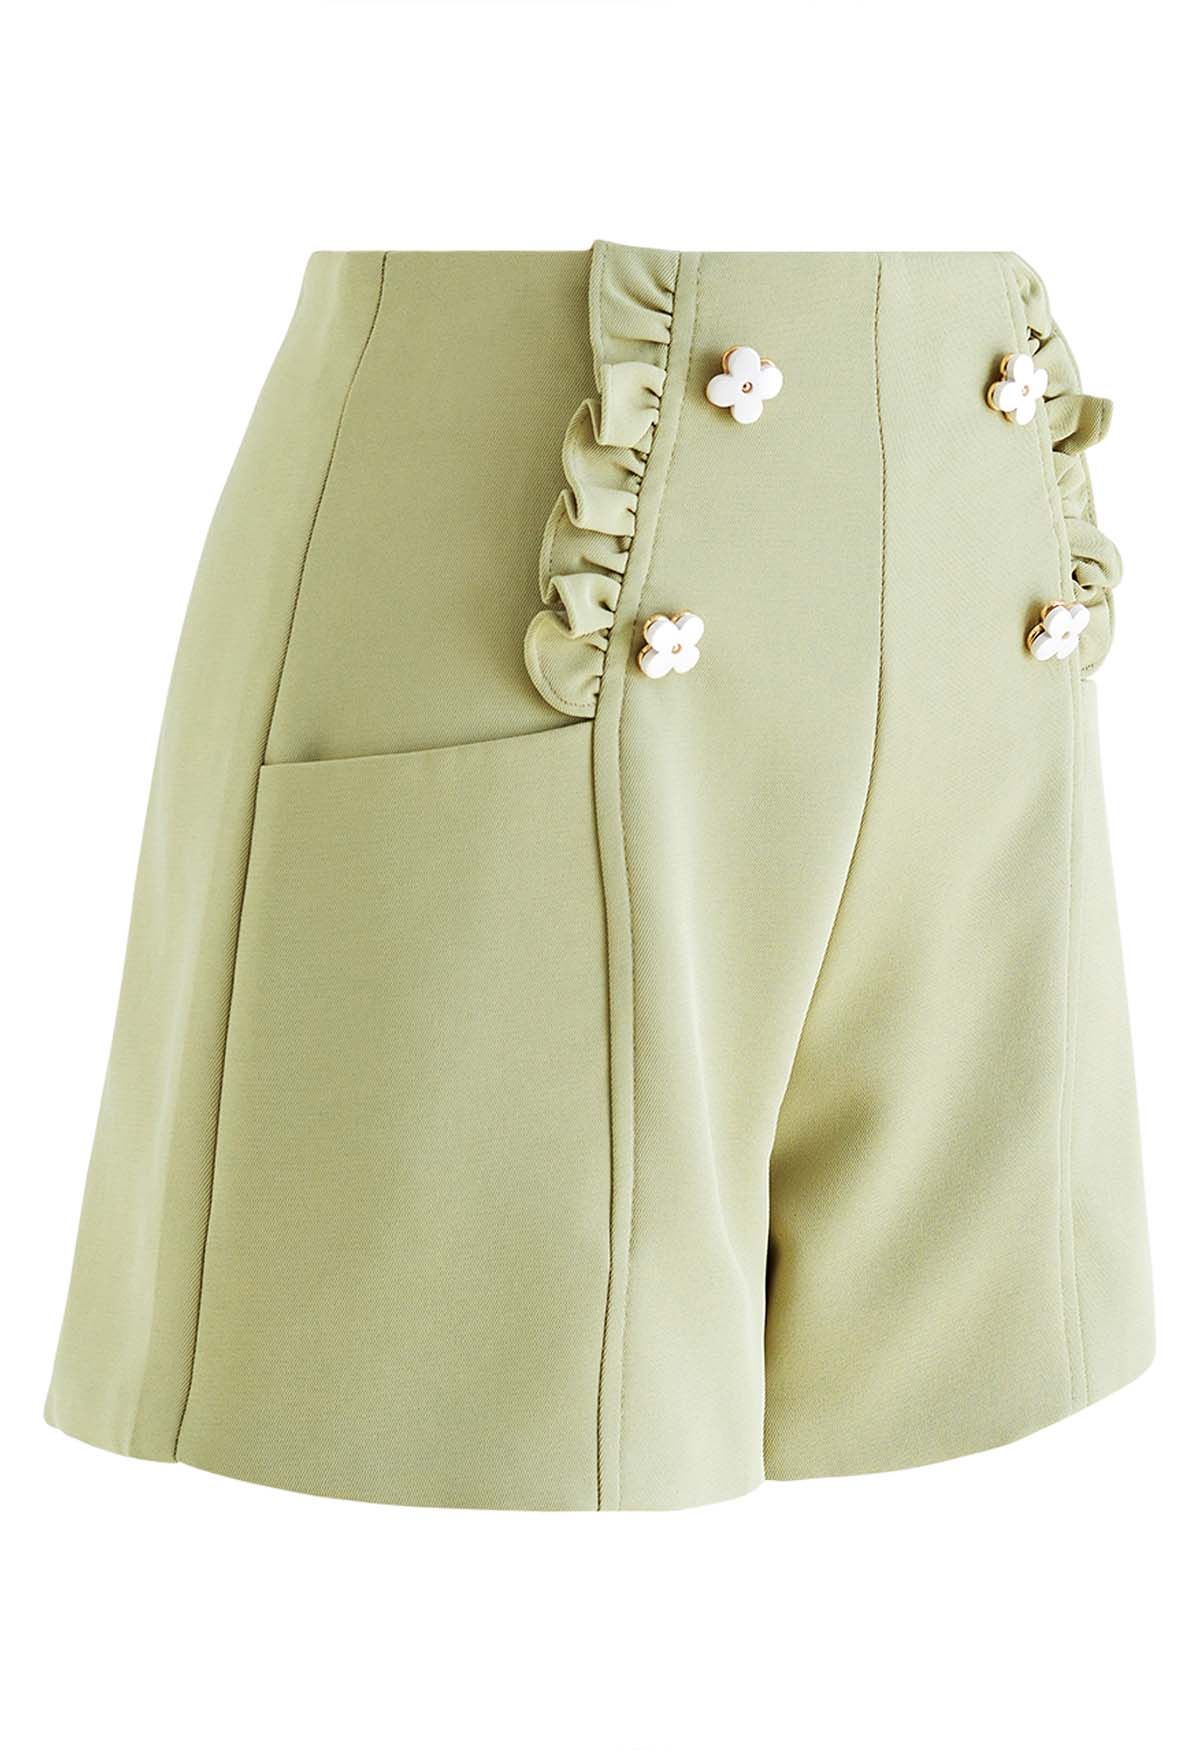 Adorables pantalones cortos con ribete de volantes de flores en verde guisante